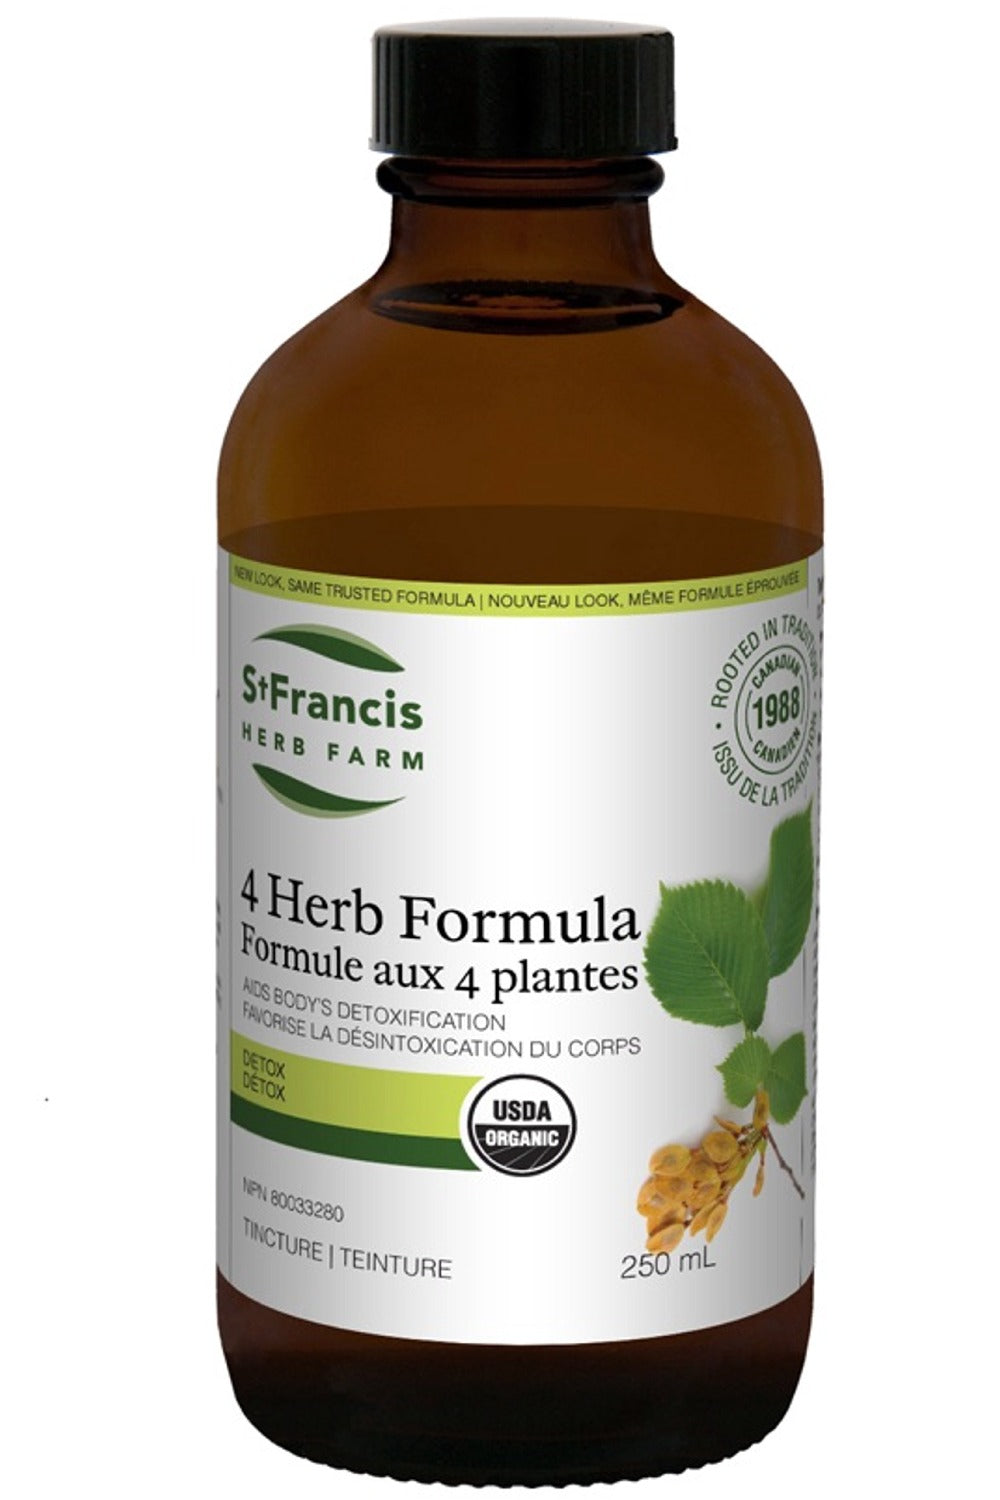 ST FRANCIS HERB FARM 4 Herb Formula (250 ml)